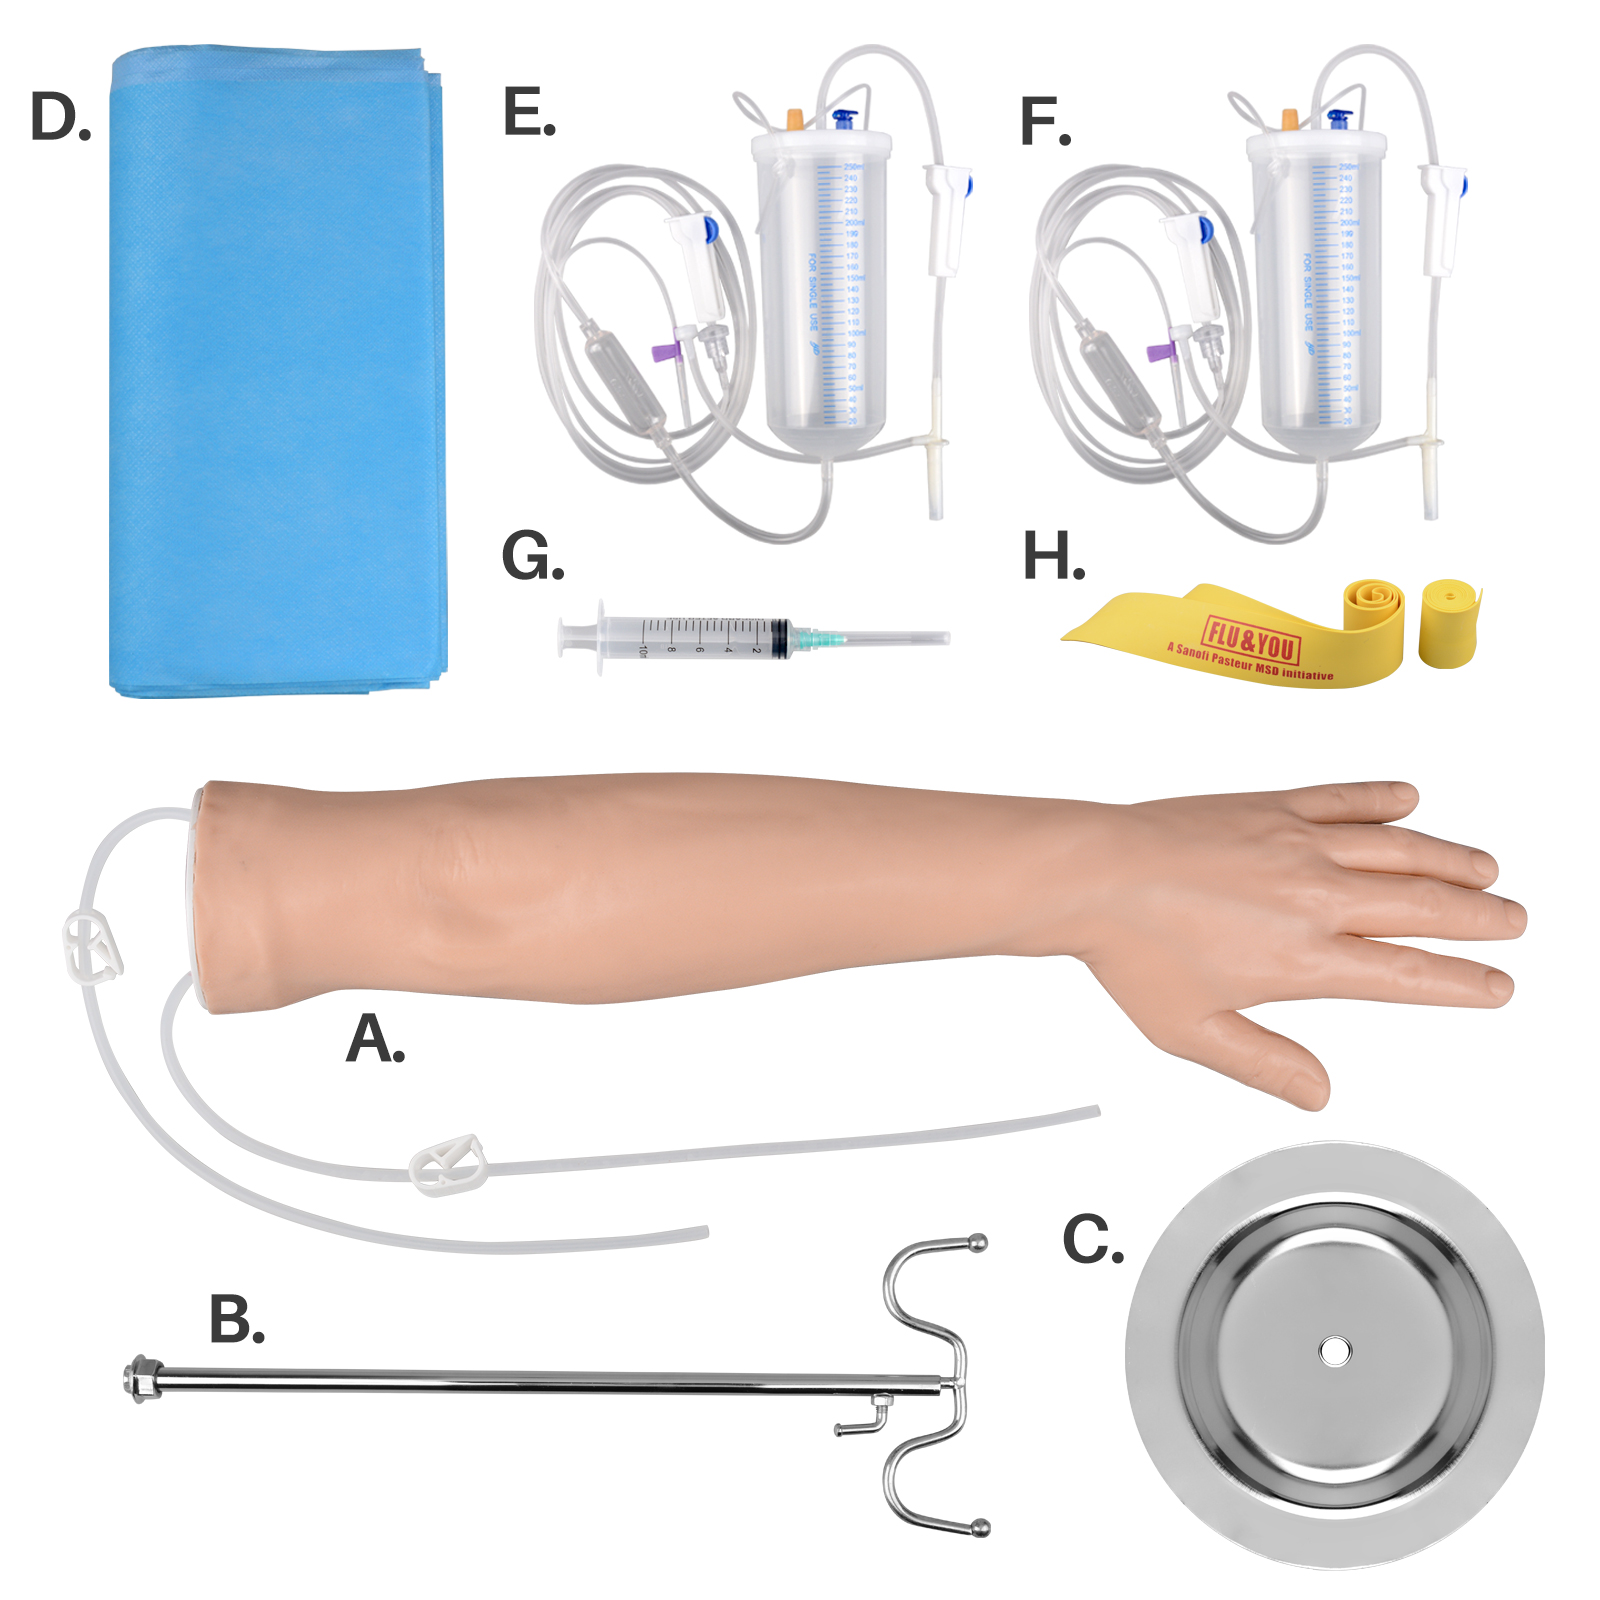 IV practice arm kit